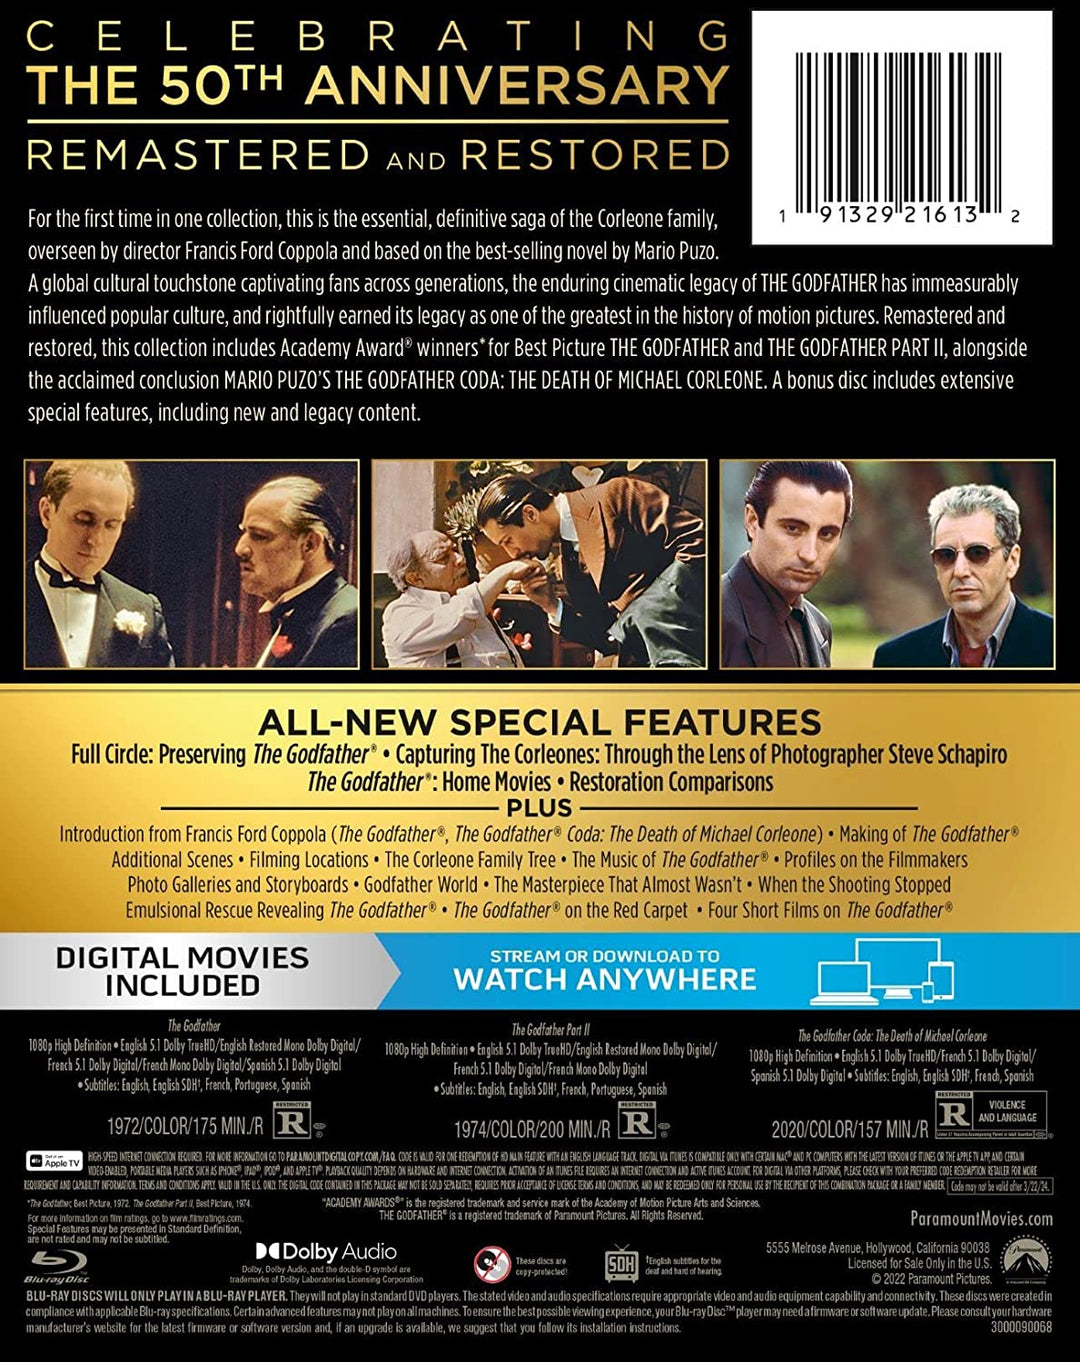 The Godfather Trilogy (50th Anniversary) [Blu-ray]